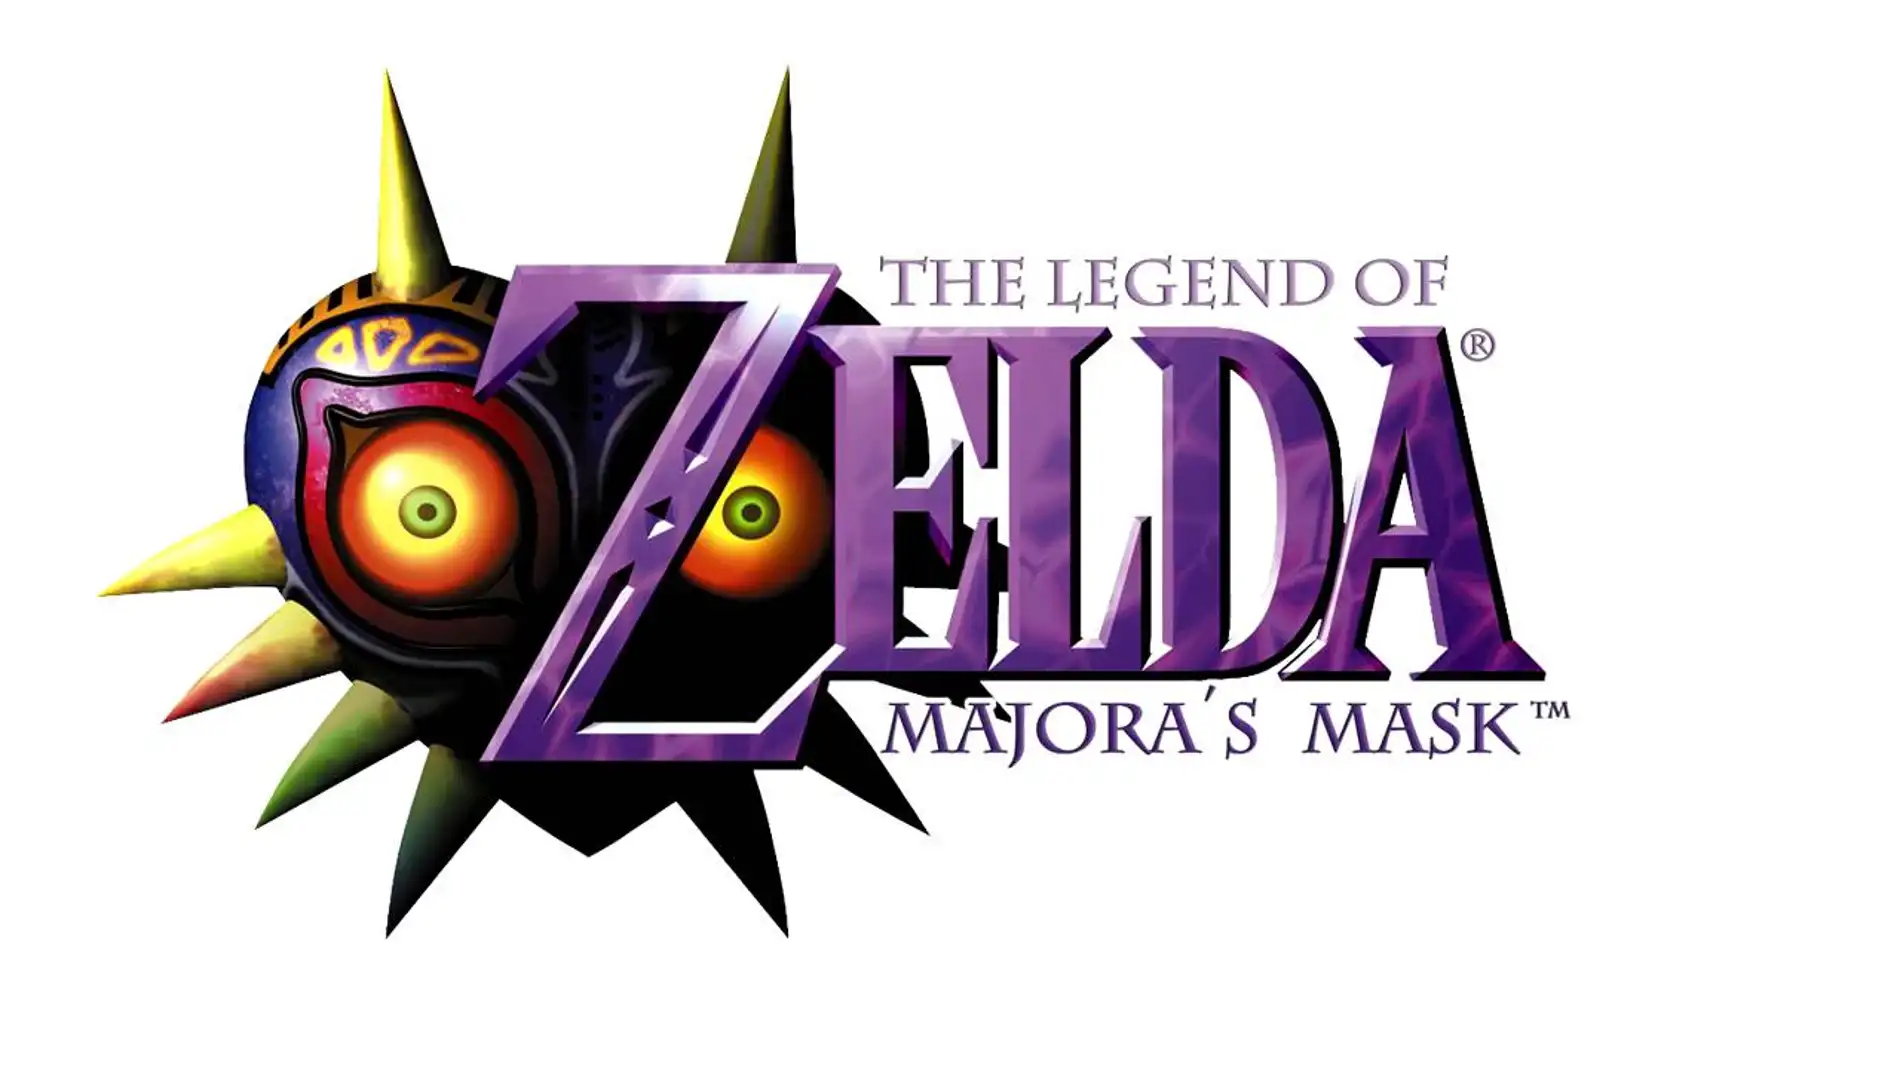 Zelda: Majora's Mask